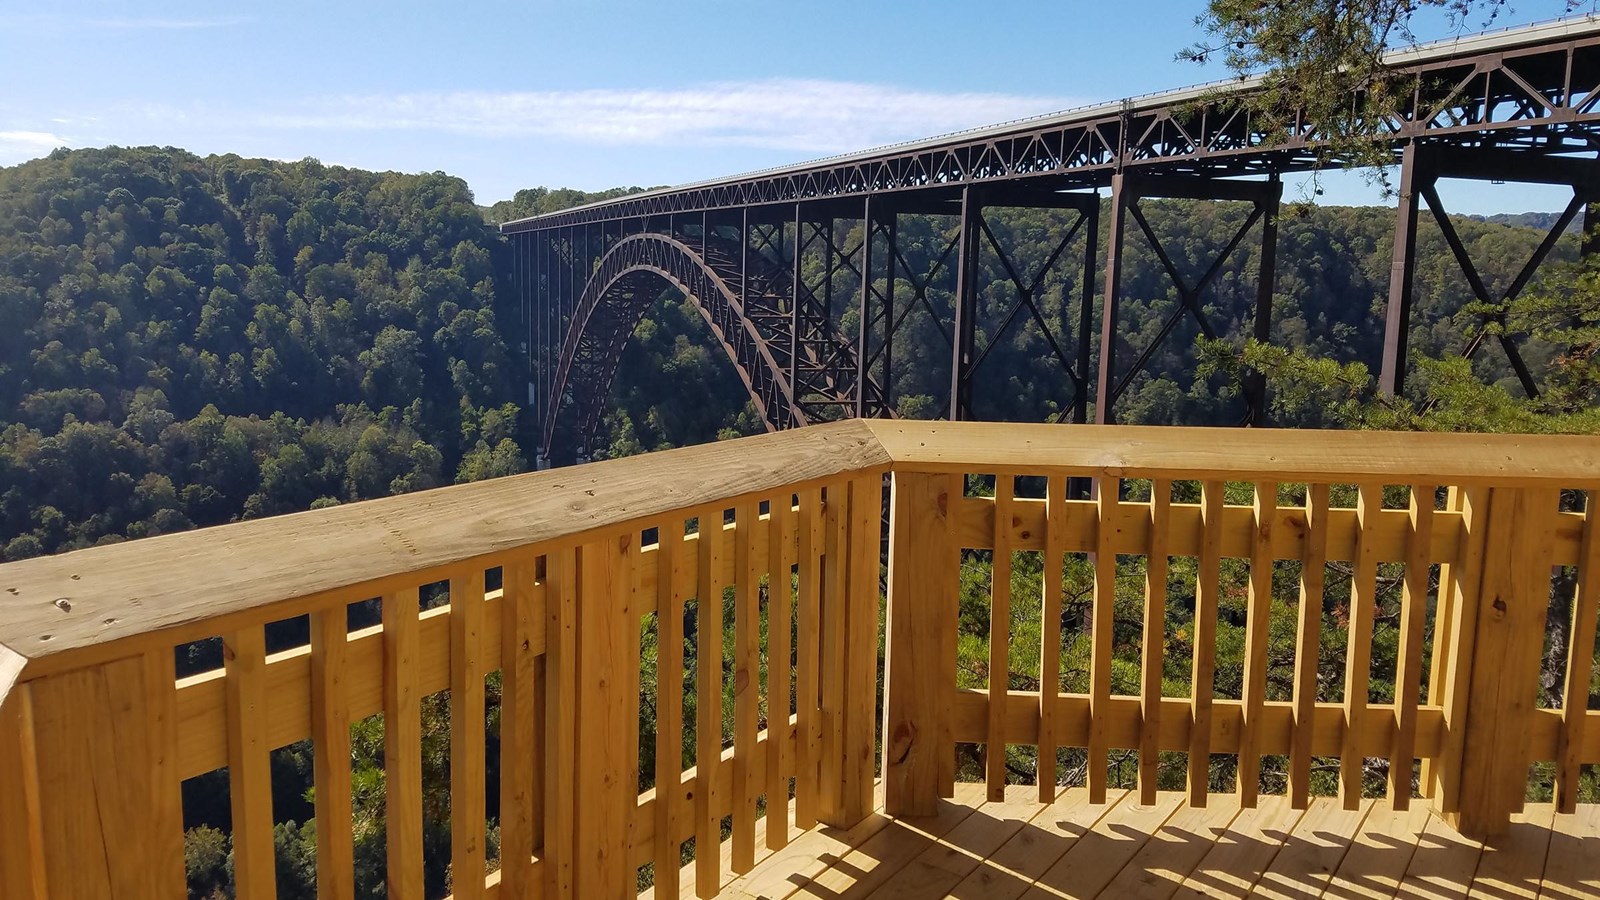 The boardwalk deck overlooking gorge and bridge